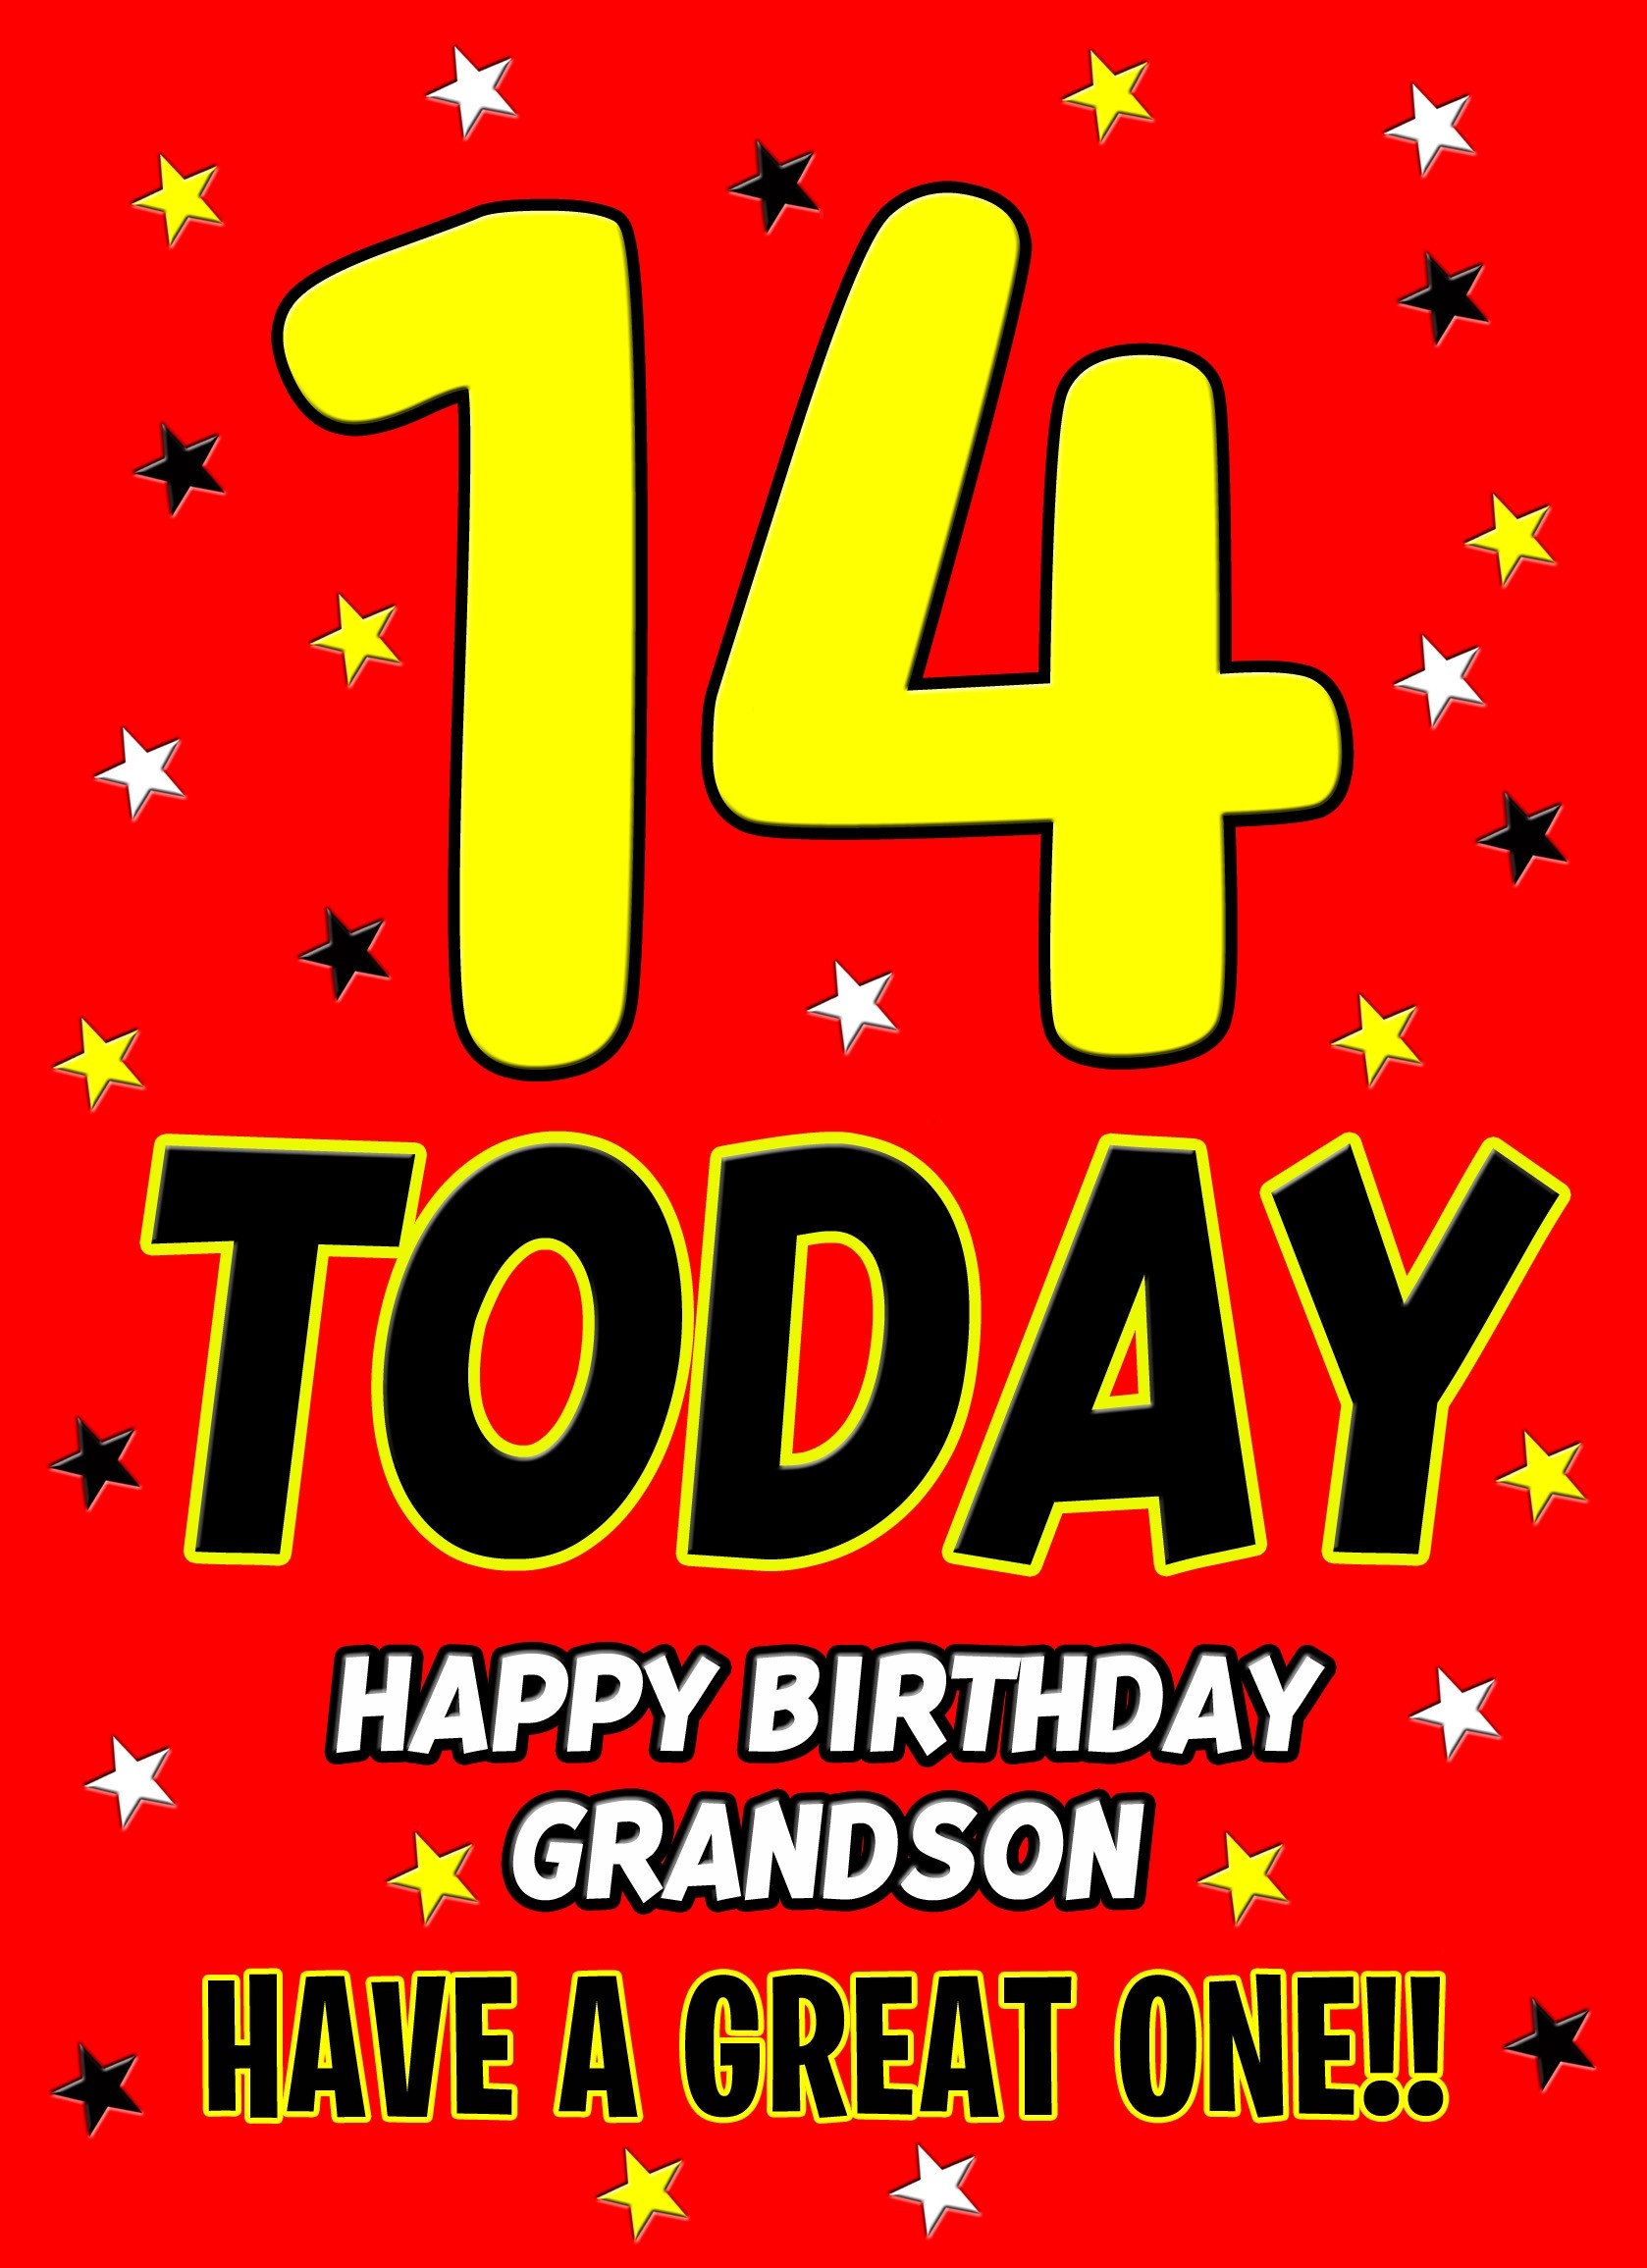 14 Today Birthday Card (Grandson)